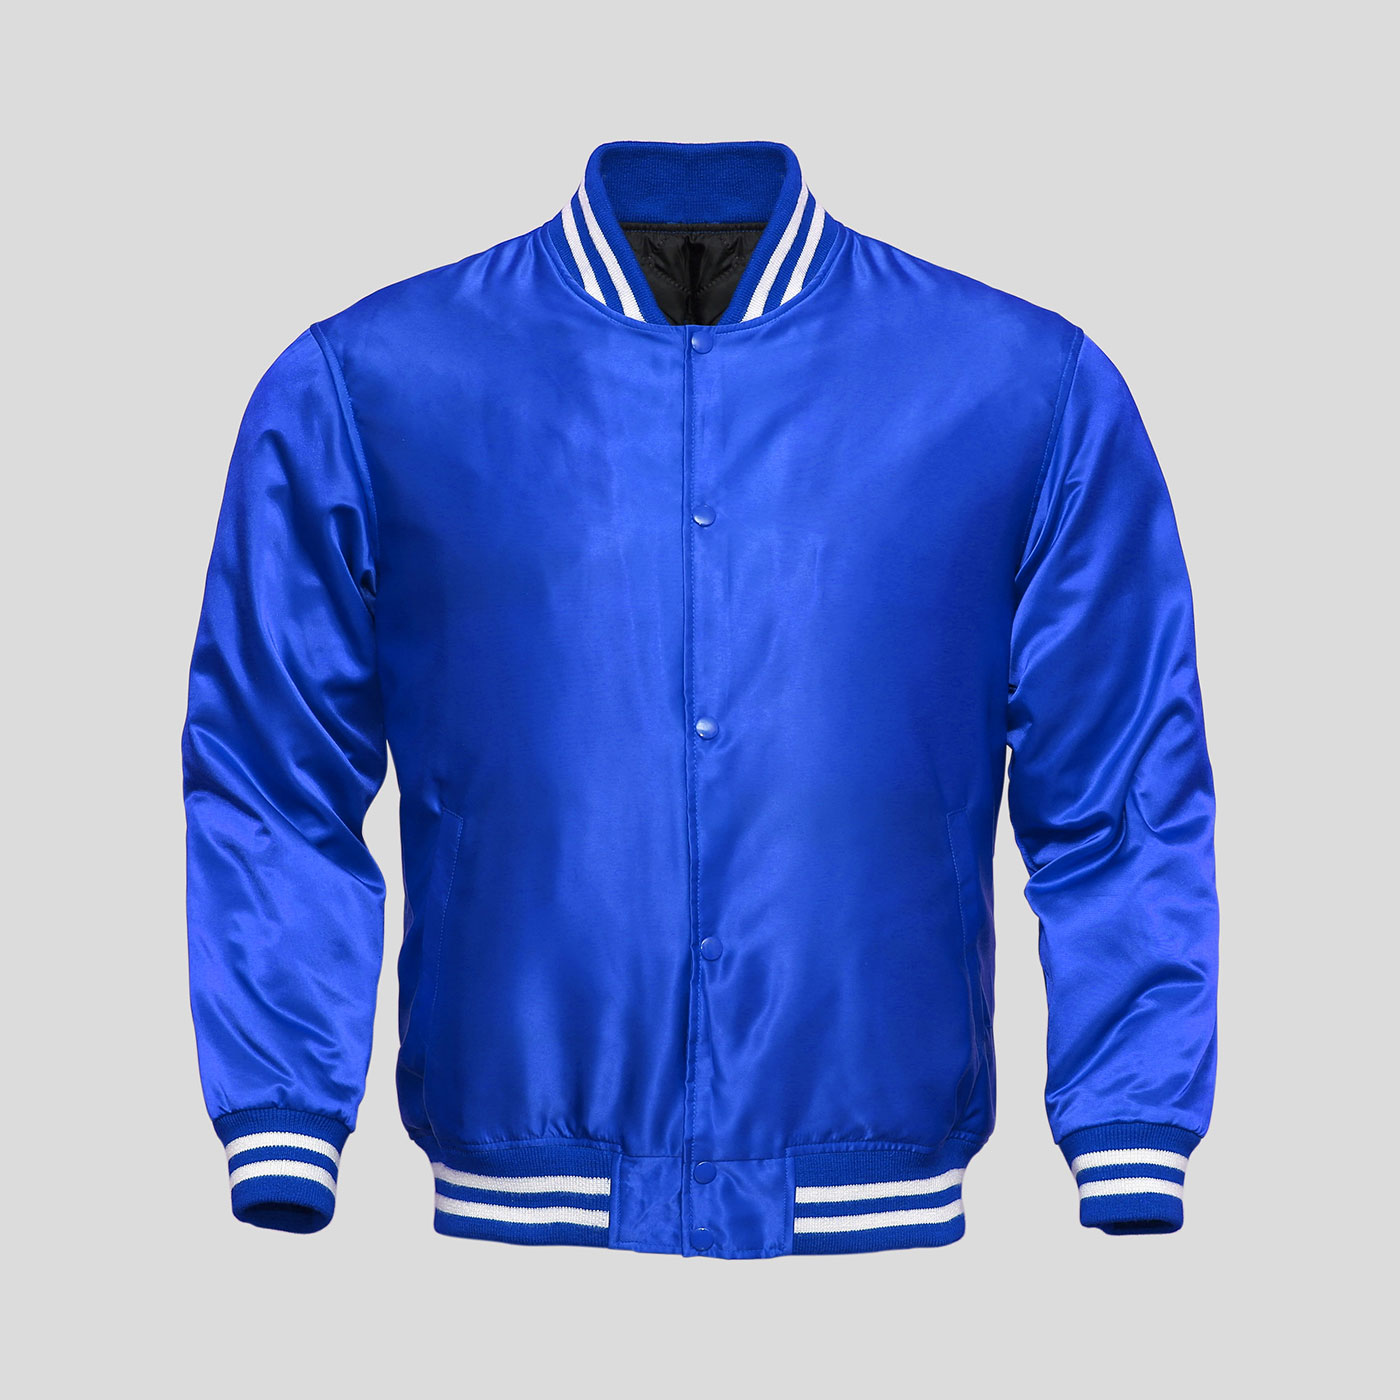 Satin Varsity Jackets Wholesale Supplier | Clothoo